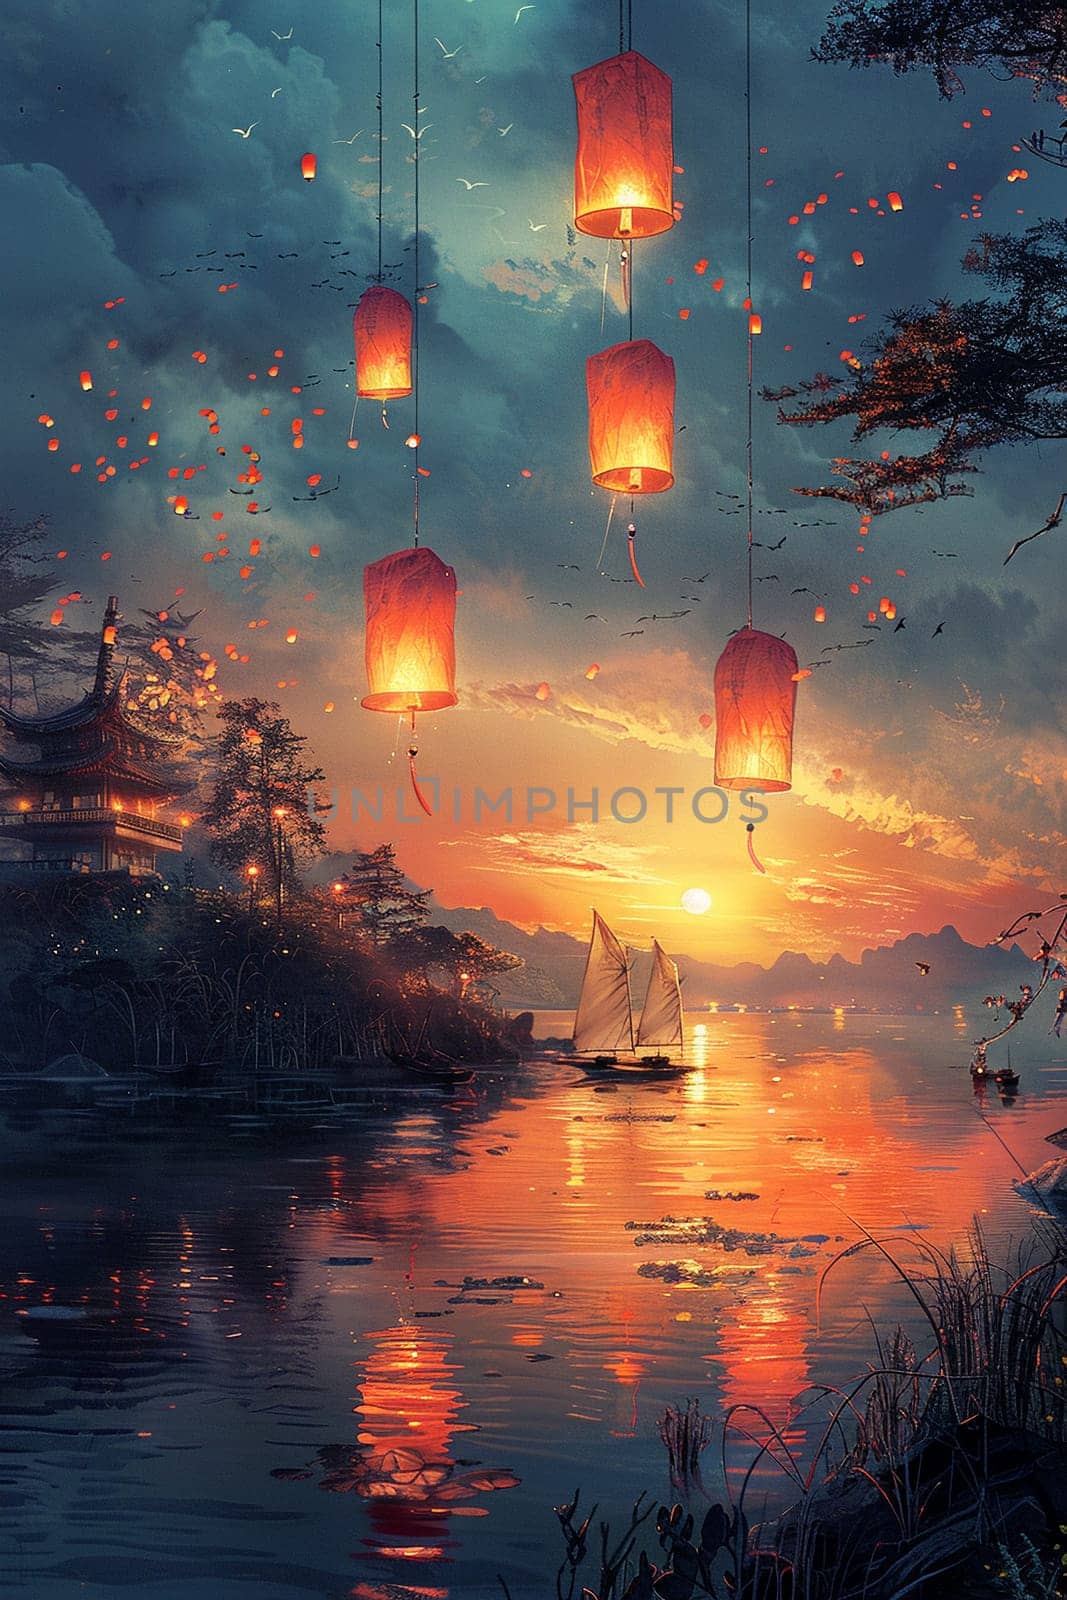 Glowing lanterns floating into the night sky, symbolizing wishes and celebrations.